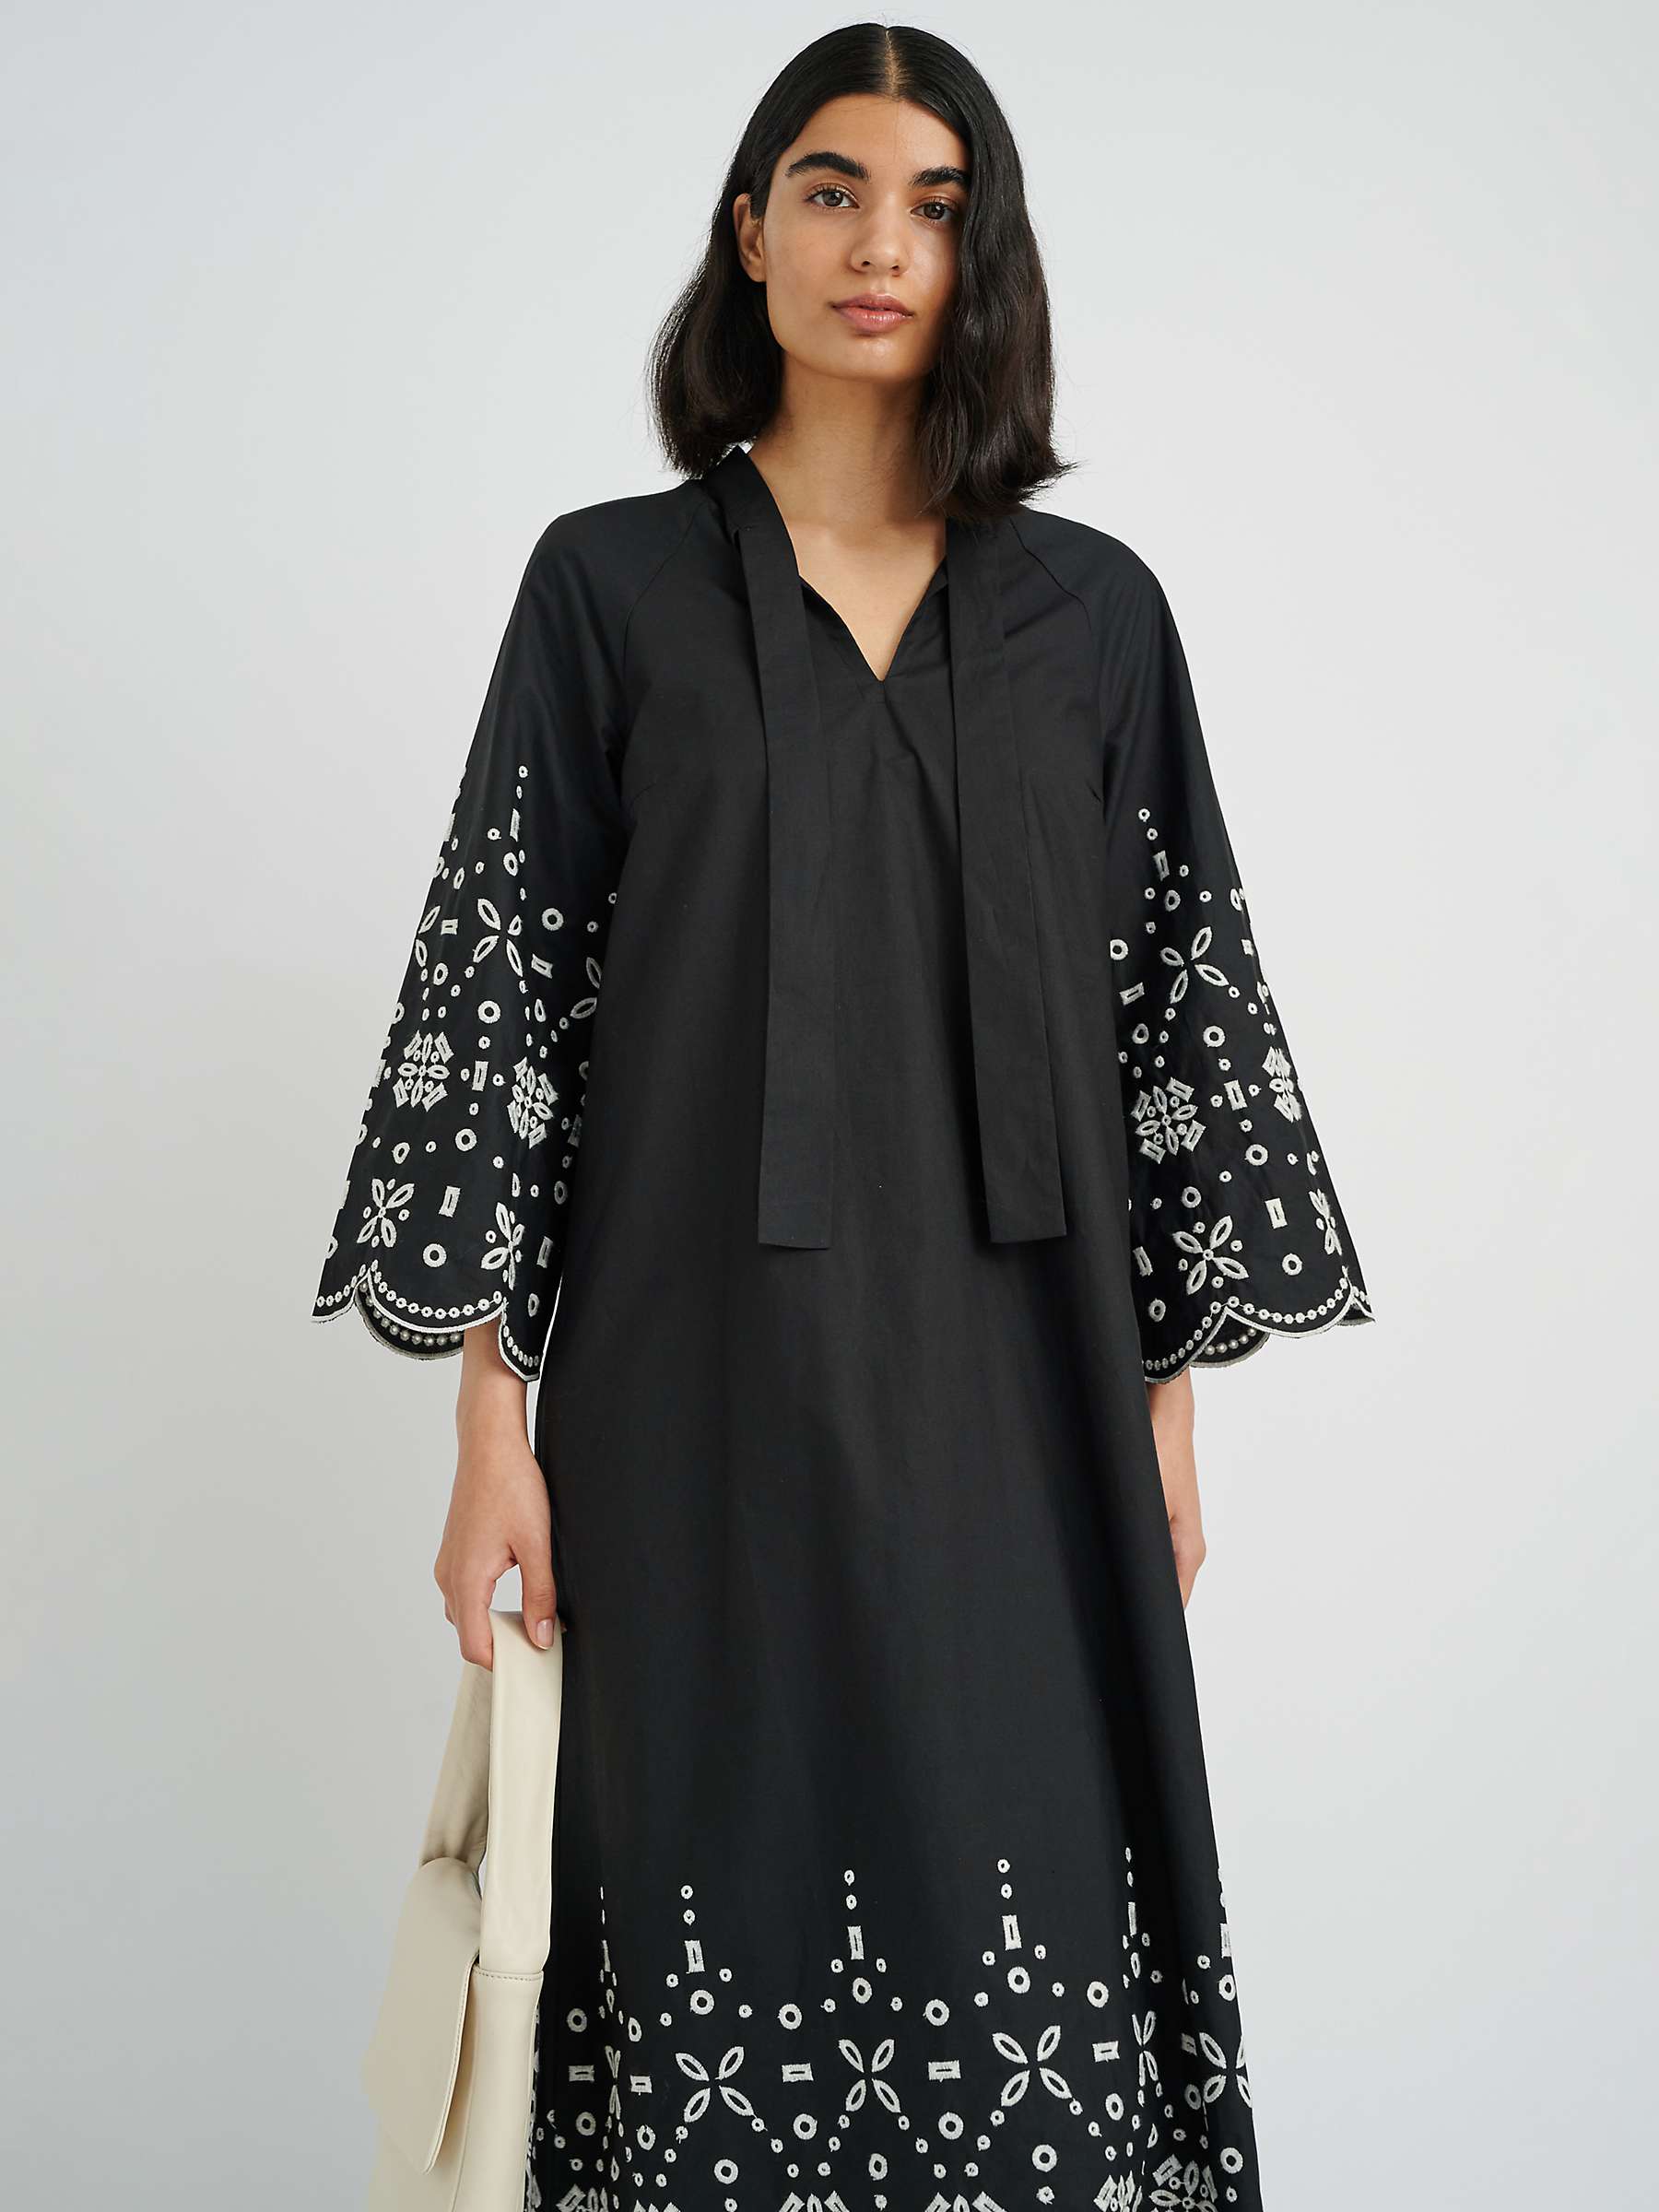 Buy InWear Dorika Cotton Broderie Anglaise Dress, Black Online at johnlewis.com